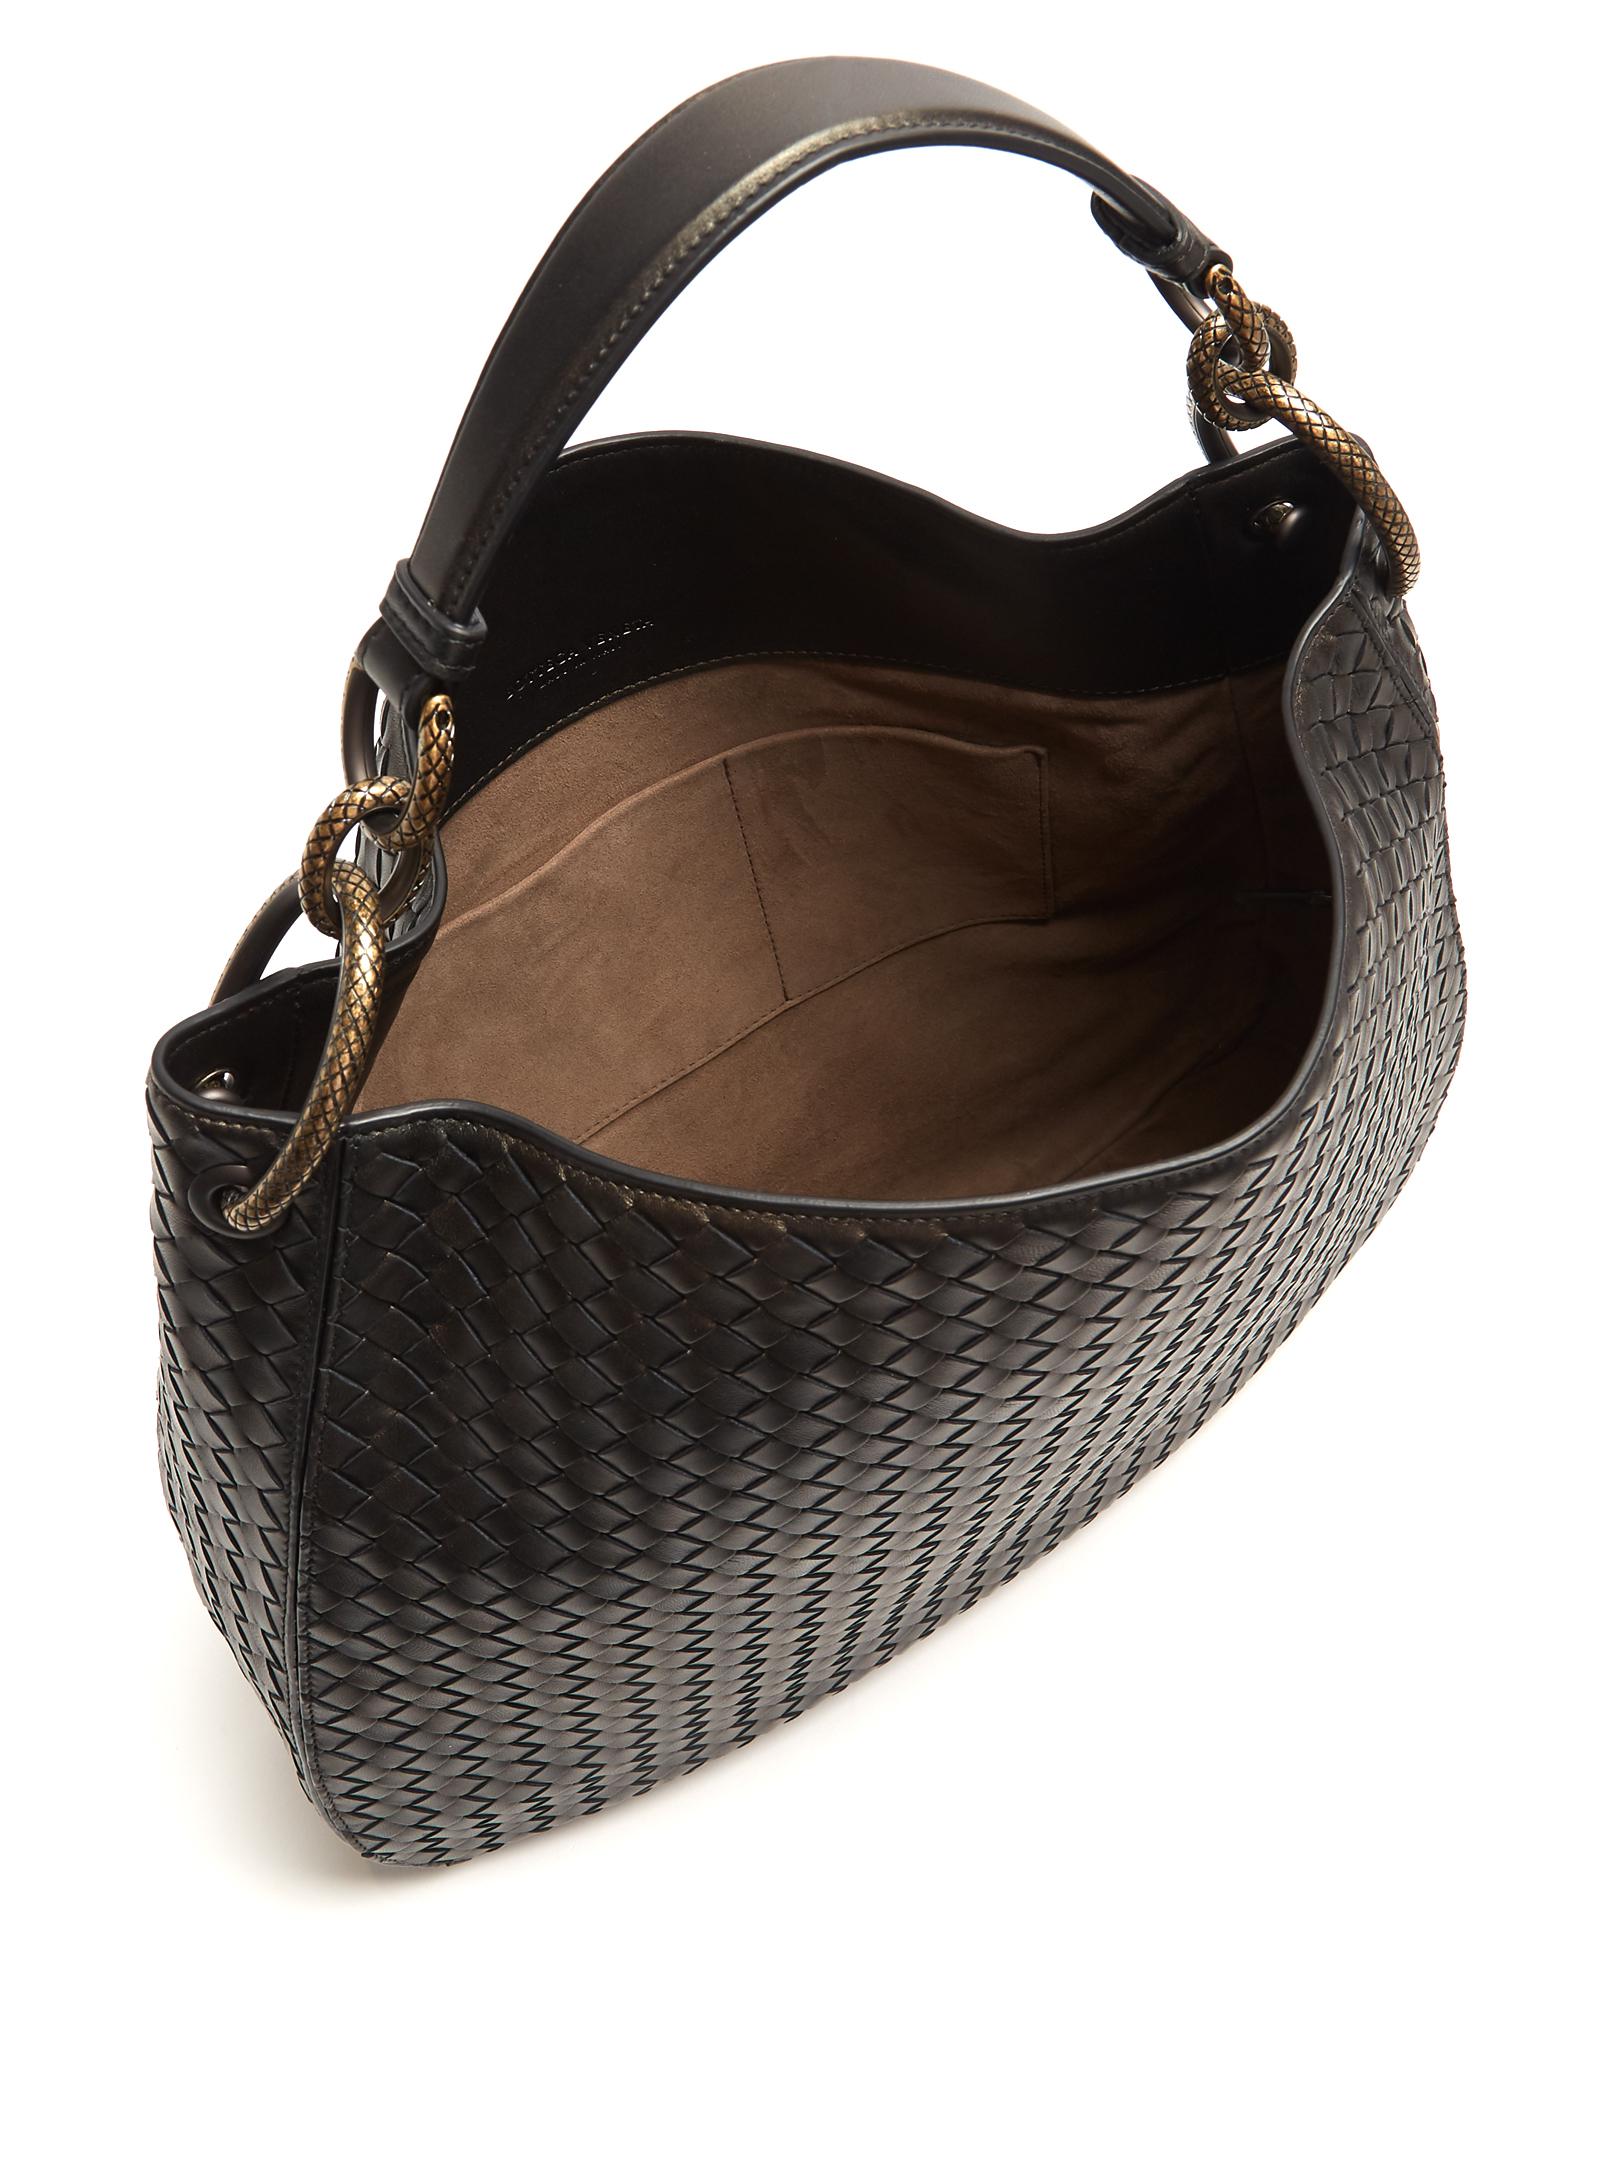 Bottega Veneta Loop Medium Intrecciato Leather Shoulder Bag in Black - Lyst